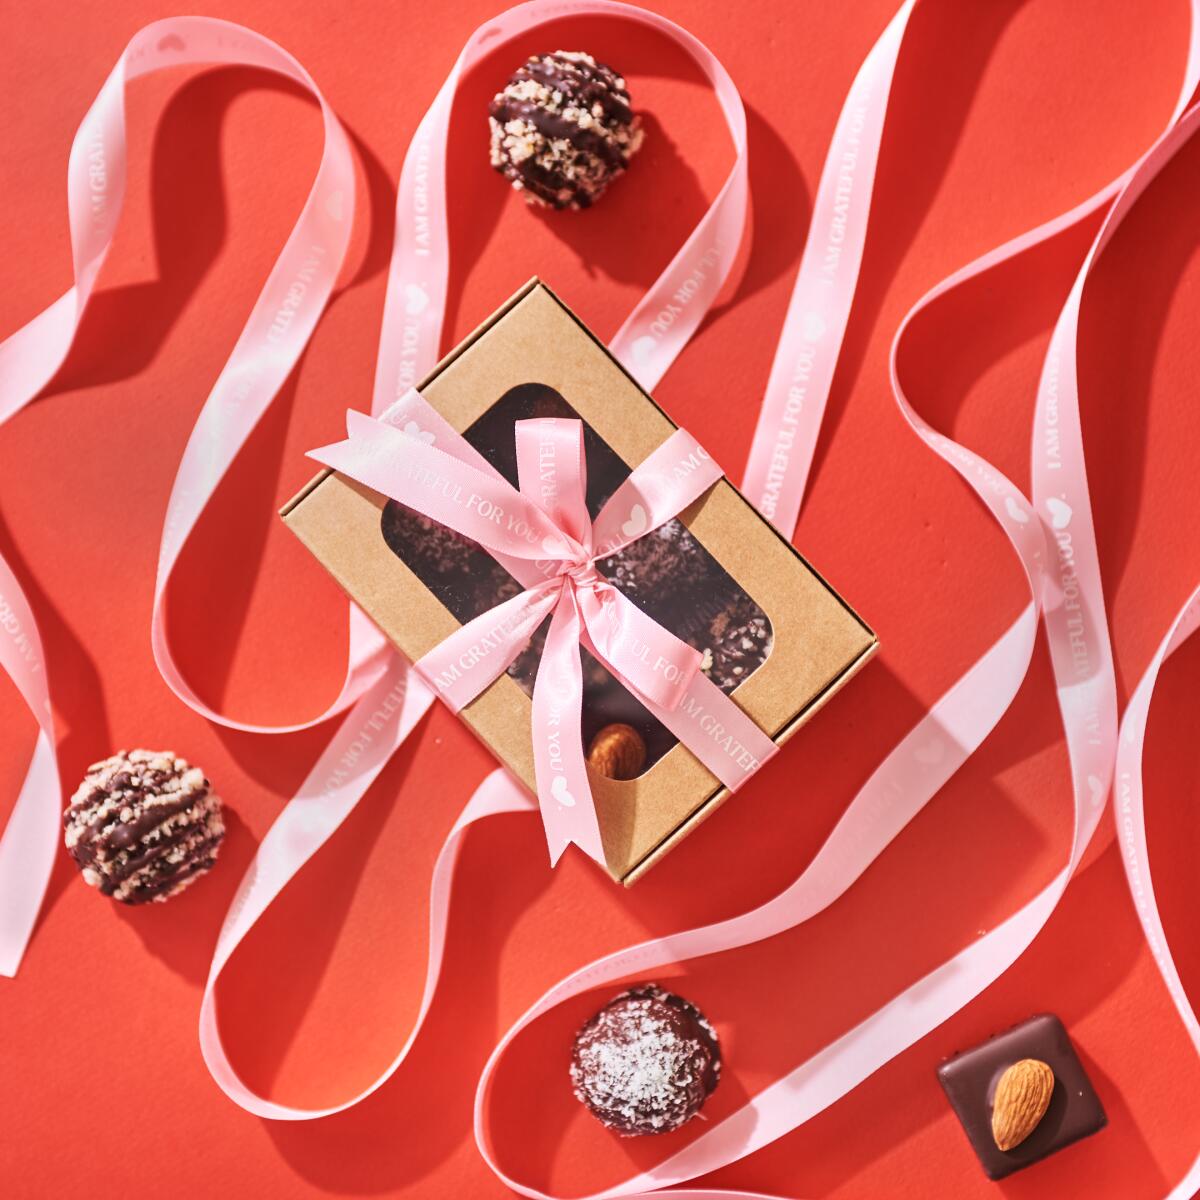 The Artisanal Valentine’s Day Chocolate Box from Café Gratitude.